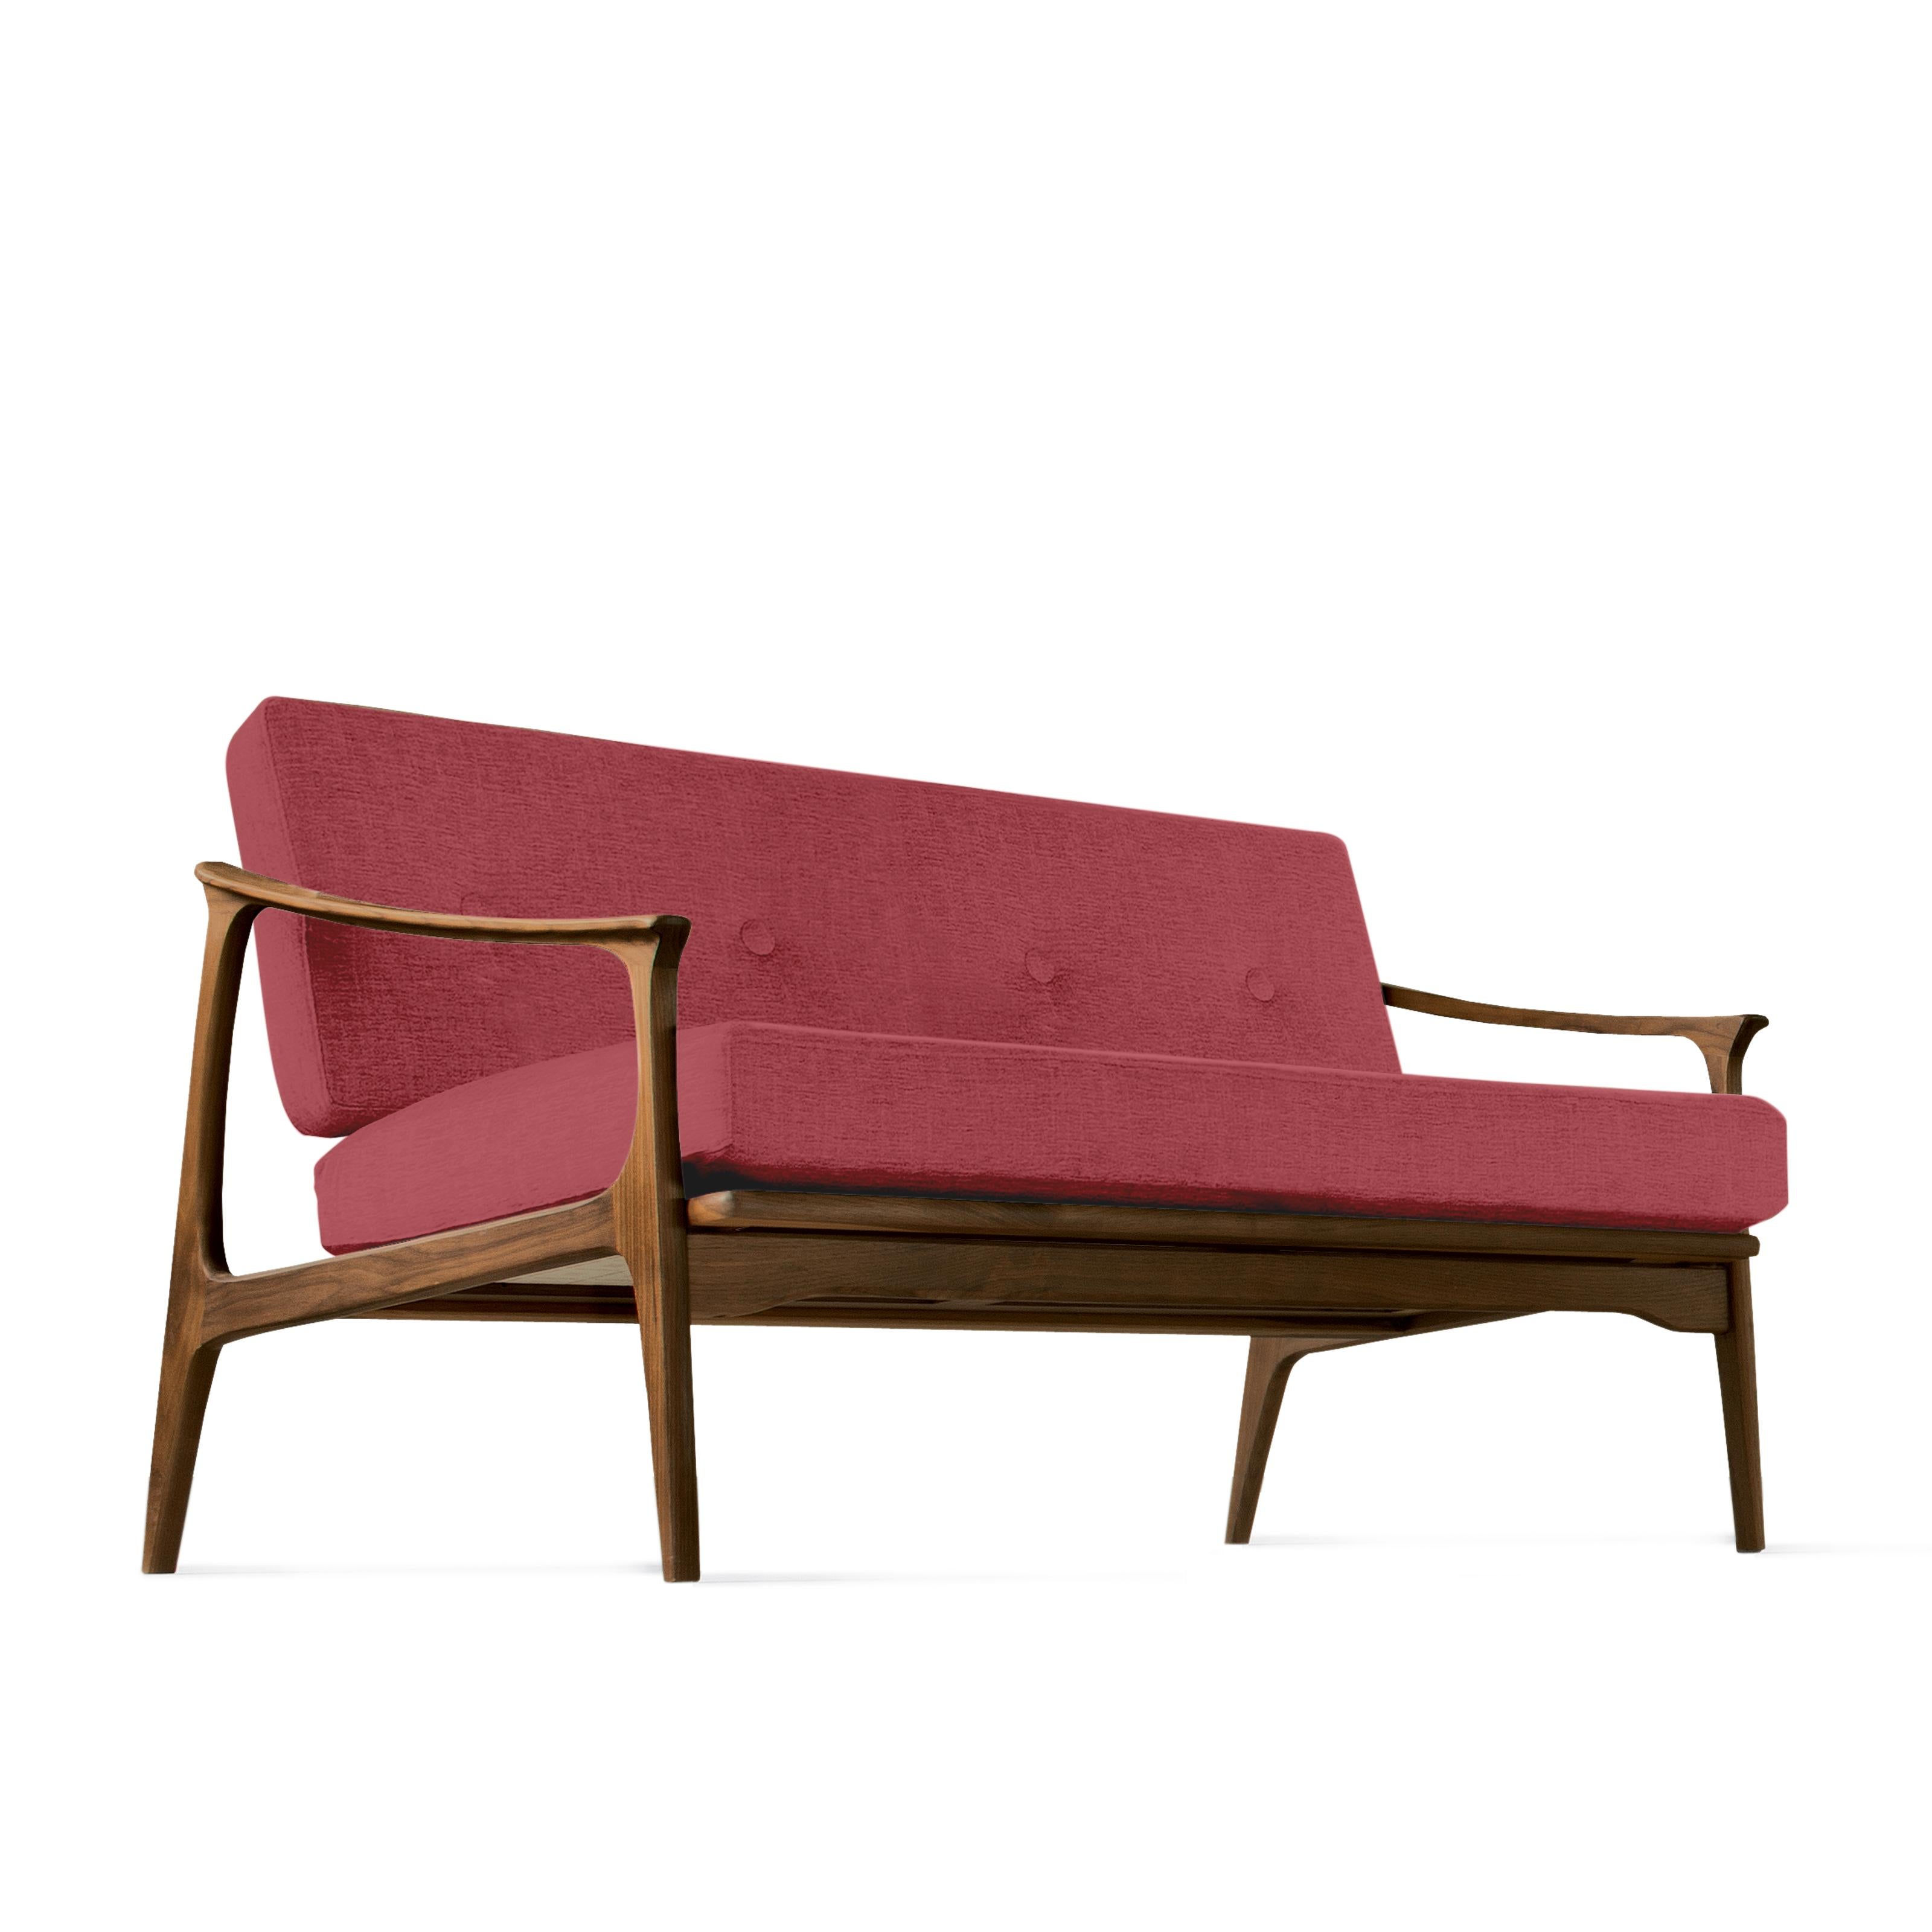 Quiete Solid Wood Sofa, Walnut in Hand-Made Natural Finish, Contemporary Design In New Condition For Sale In Cadeglioppi de Oppeano, VR